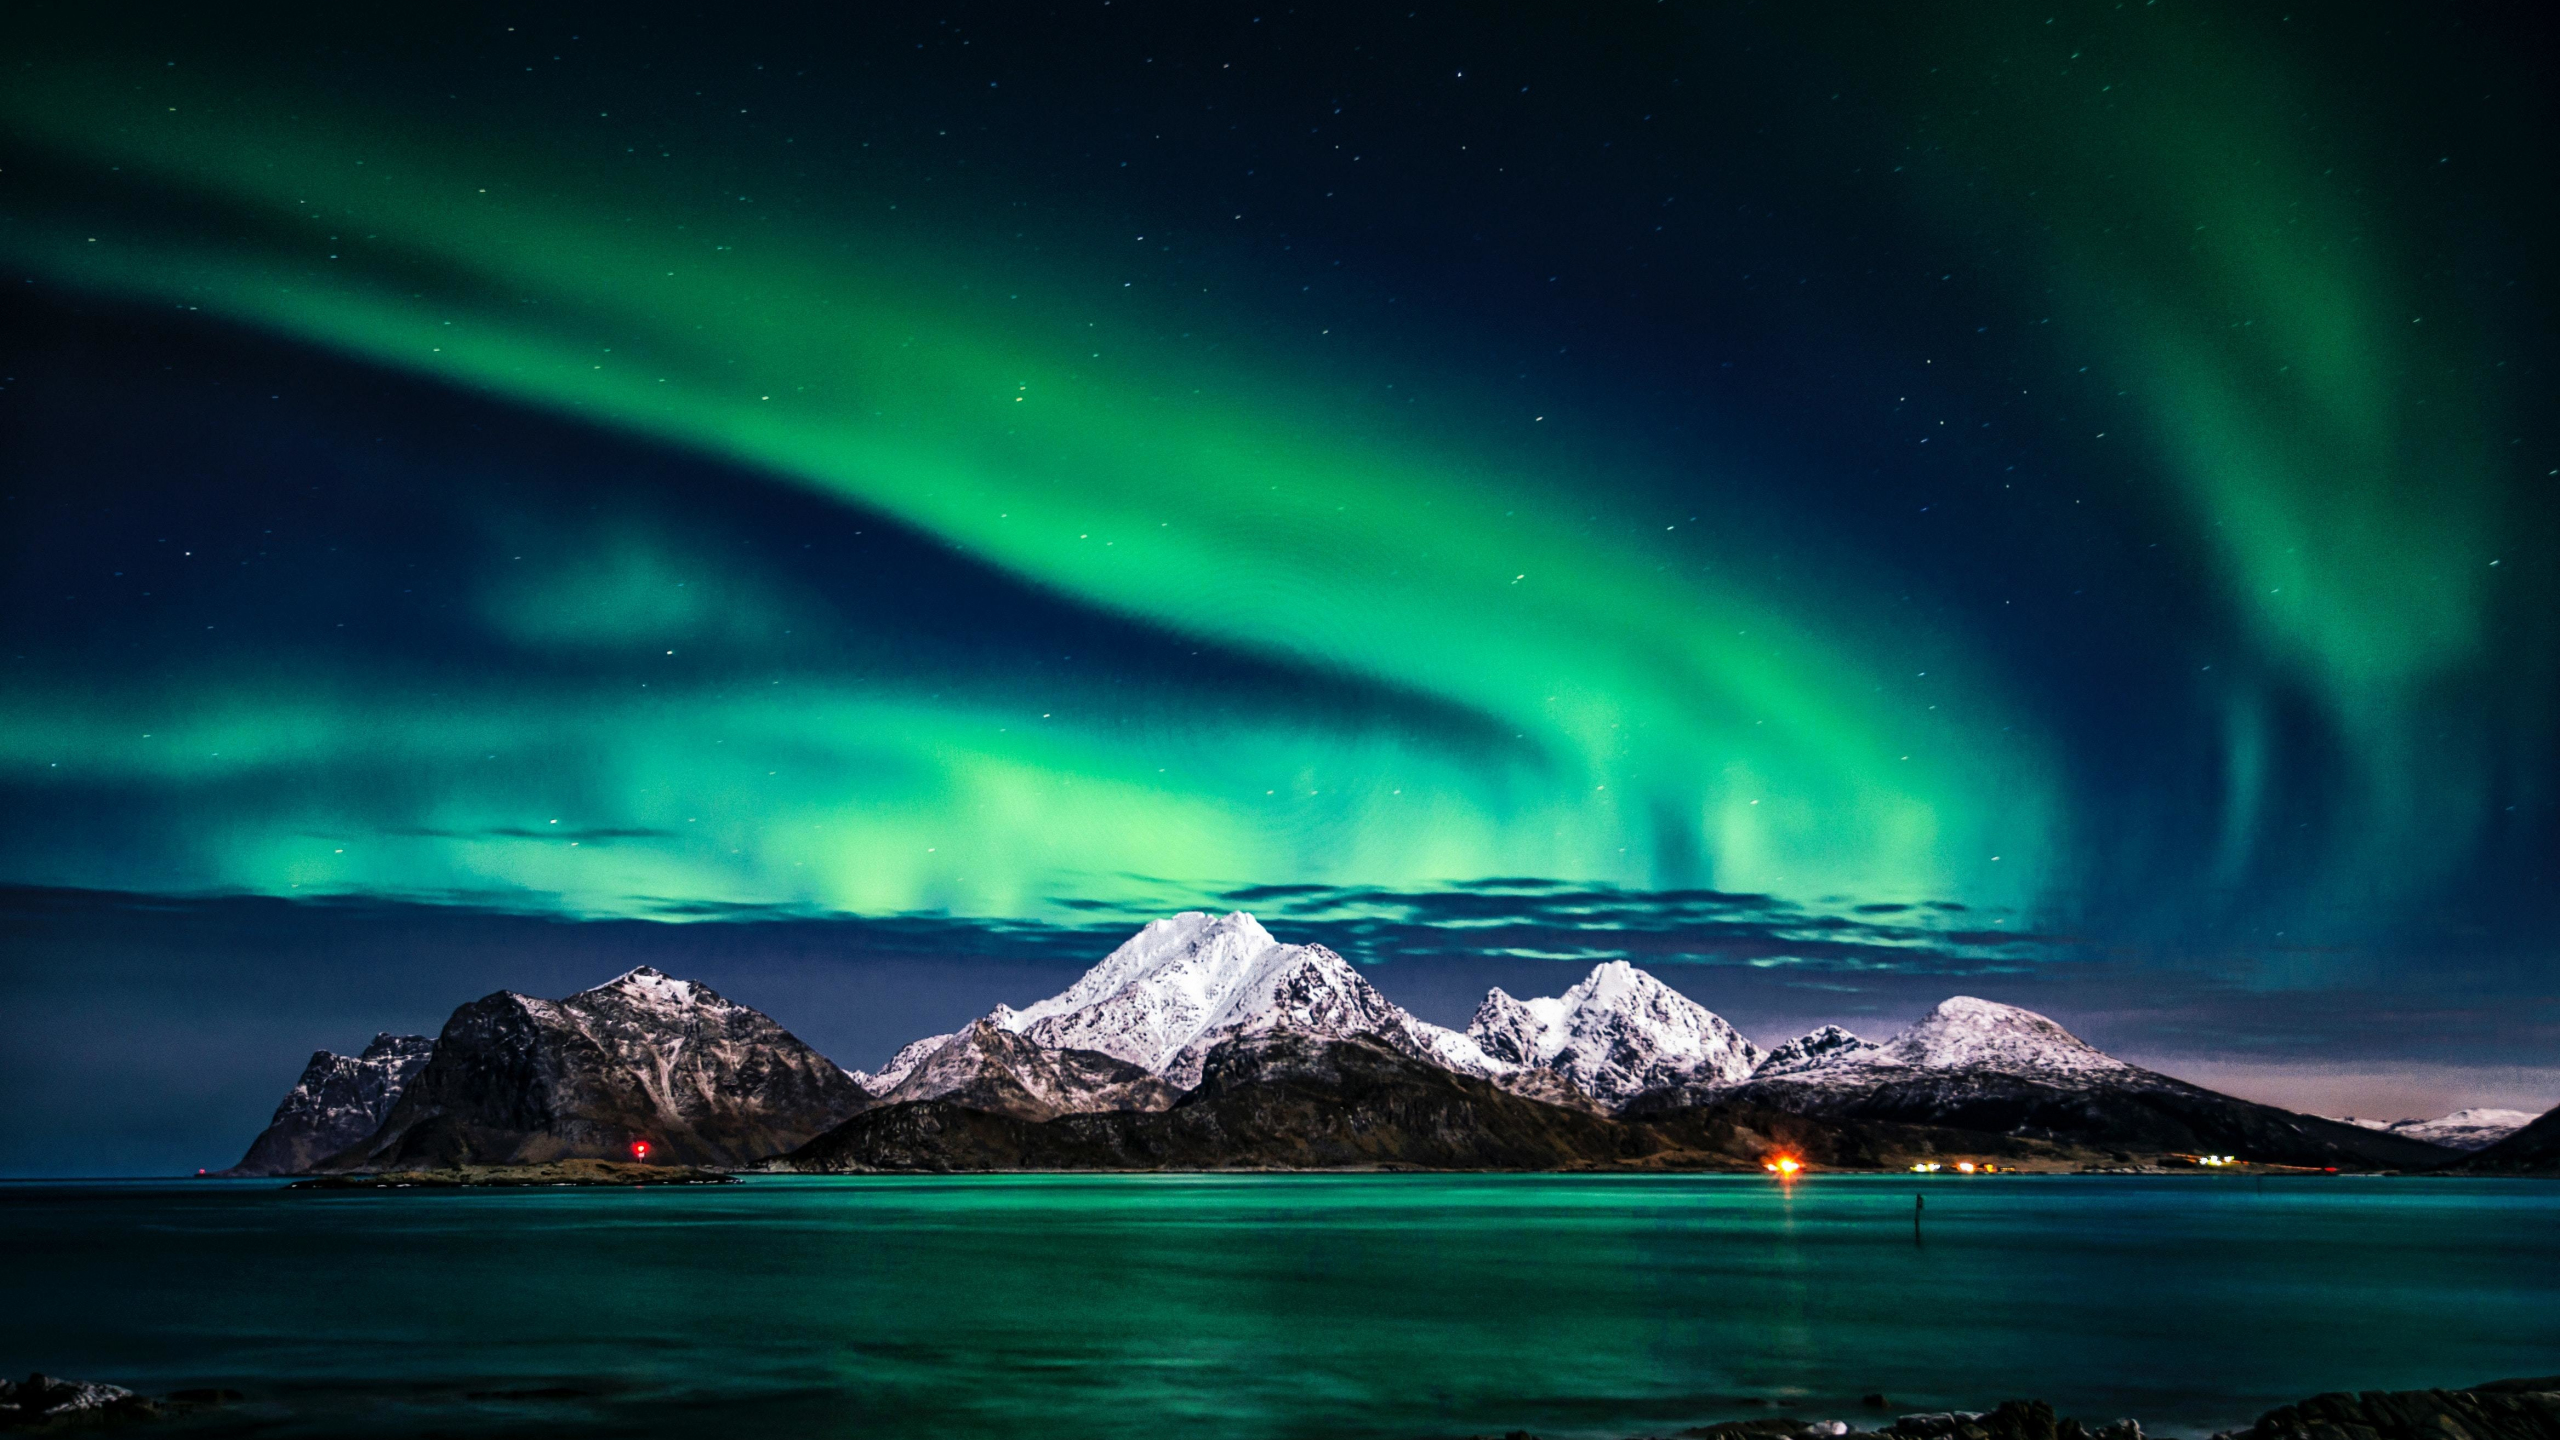 Download wallpaper 2560x1440 aurora borealis, green lights, sky, night,  europe, dual wide 16:9 2560x1440 hd background, 19522